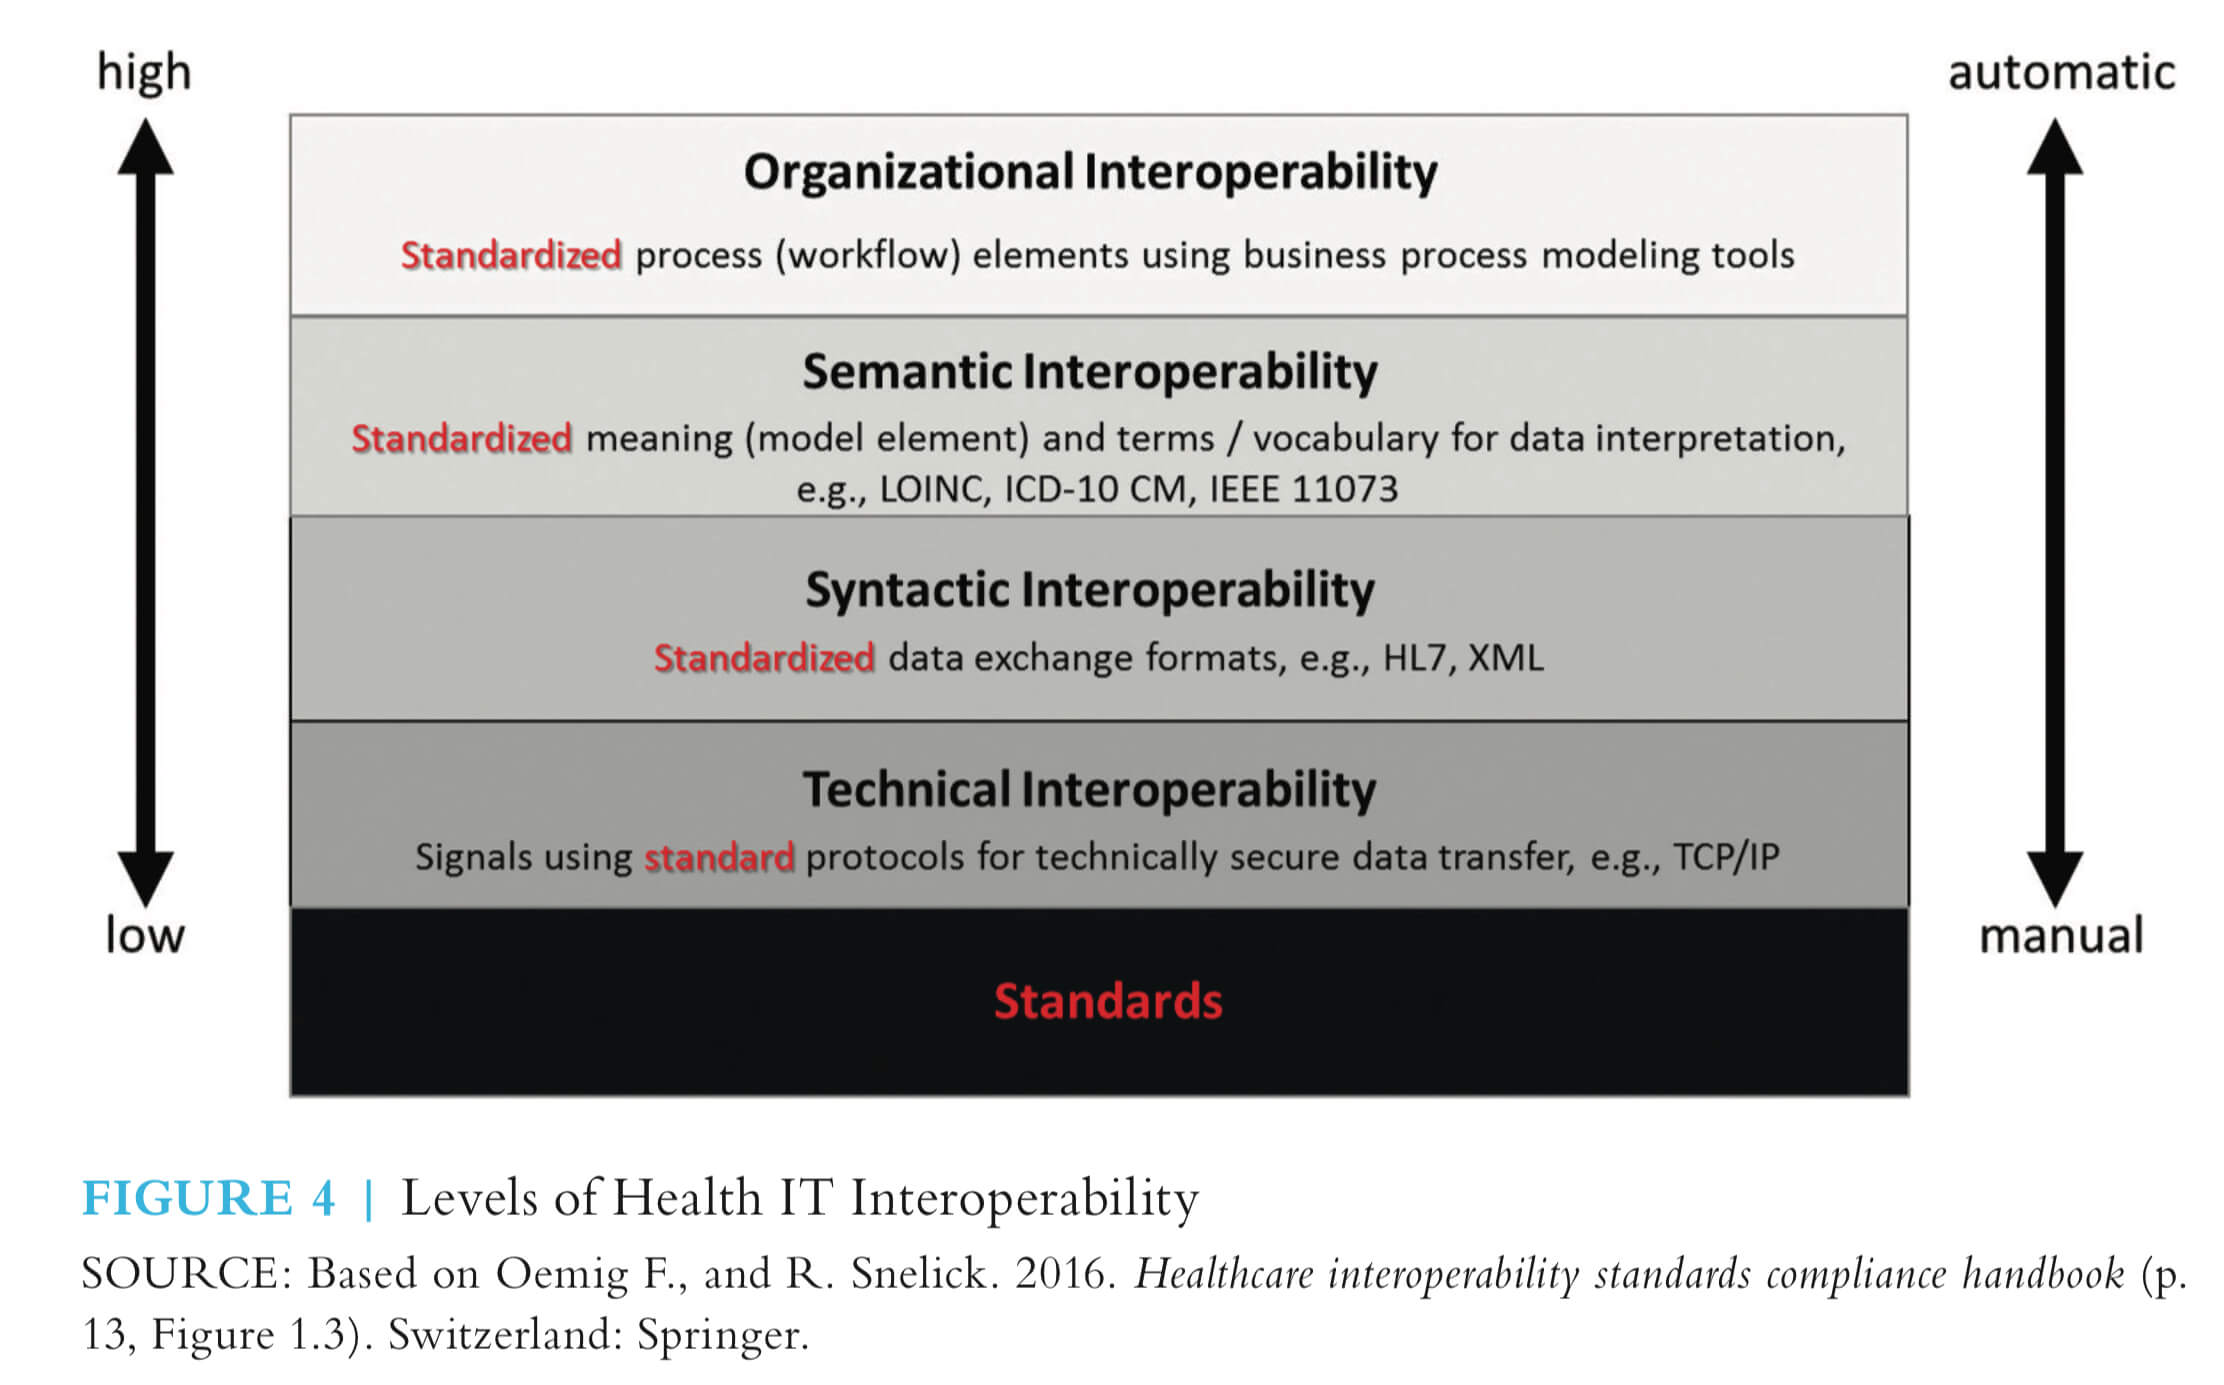 Levels of Health IT Interoperability